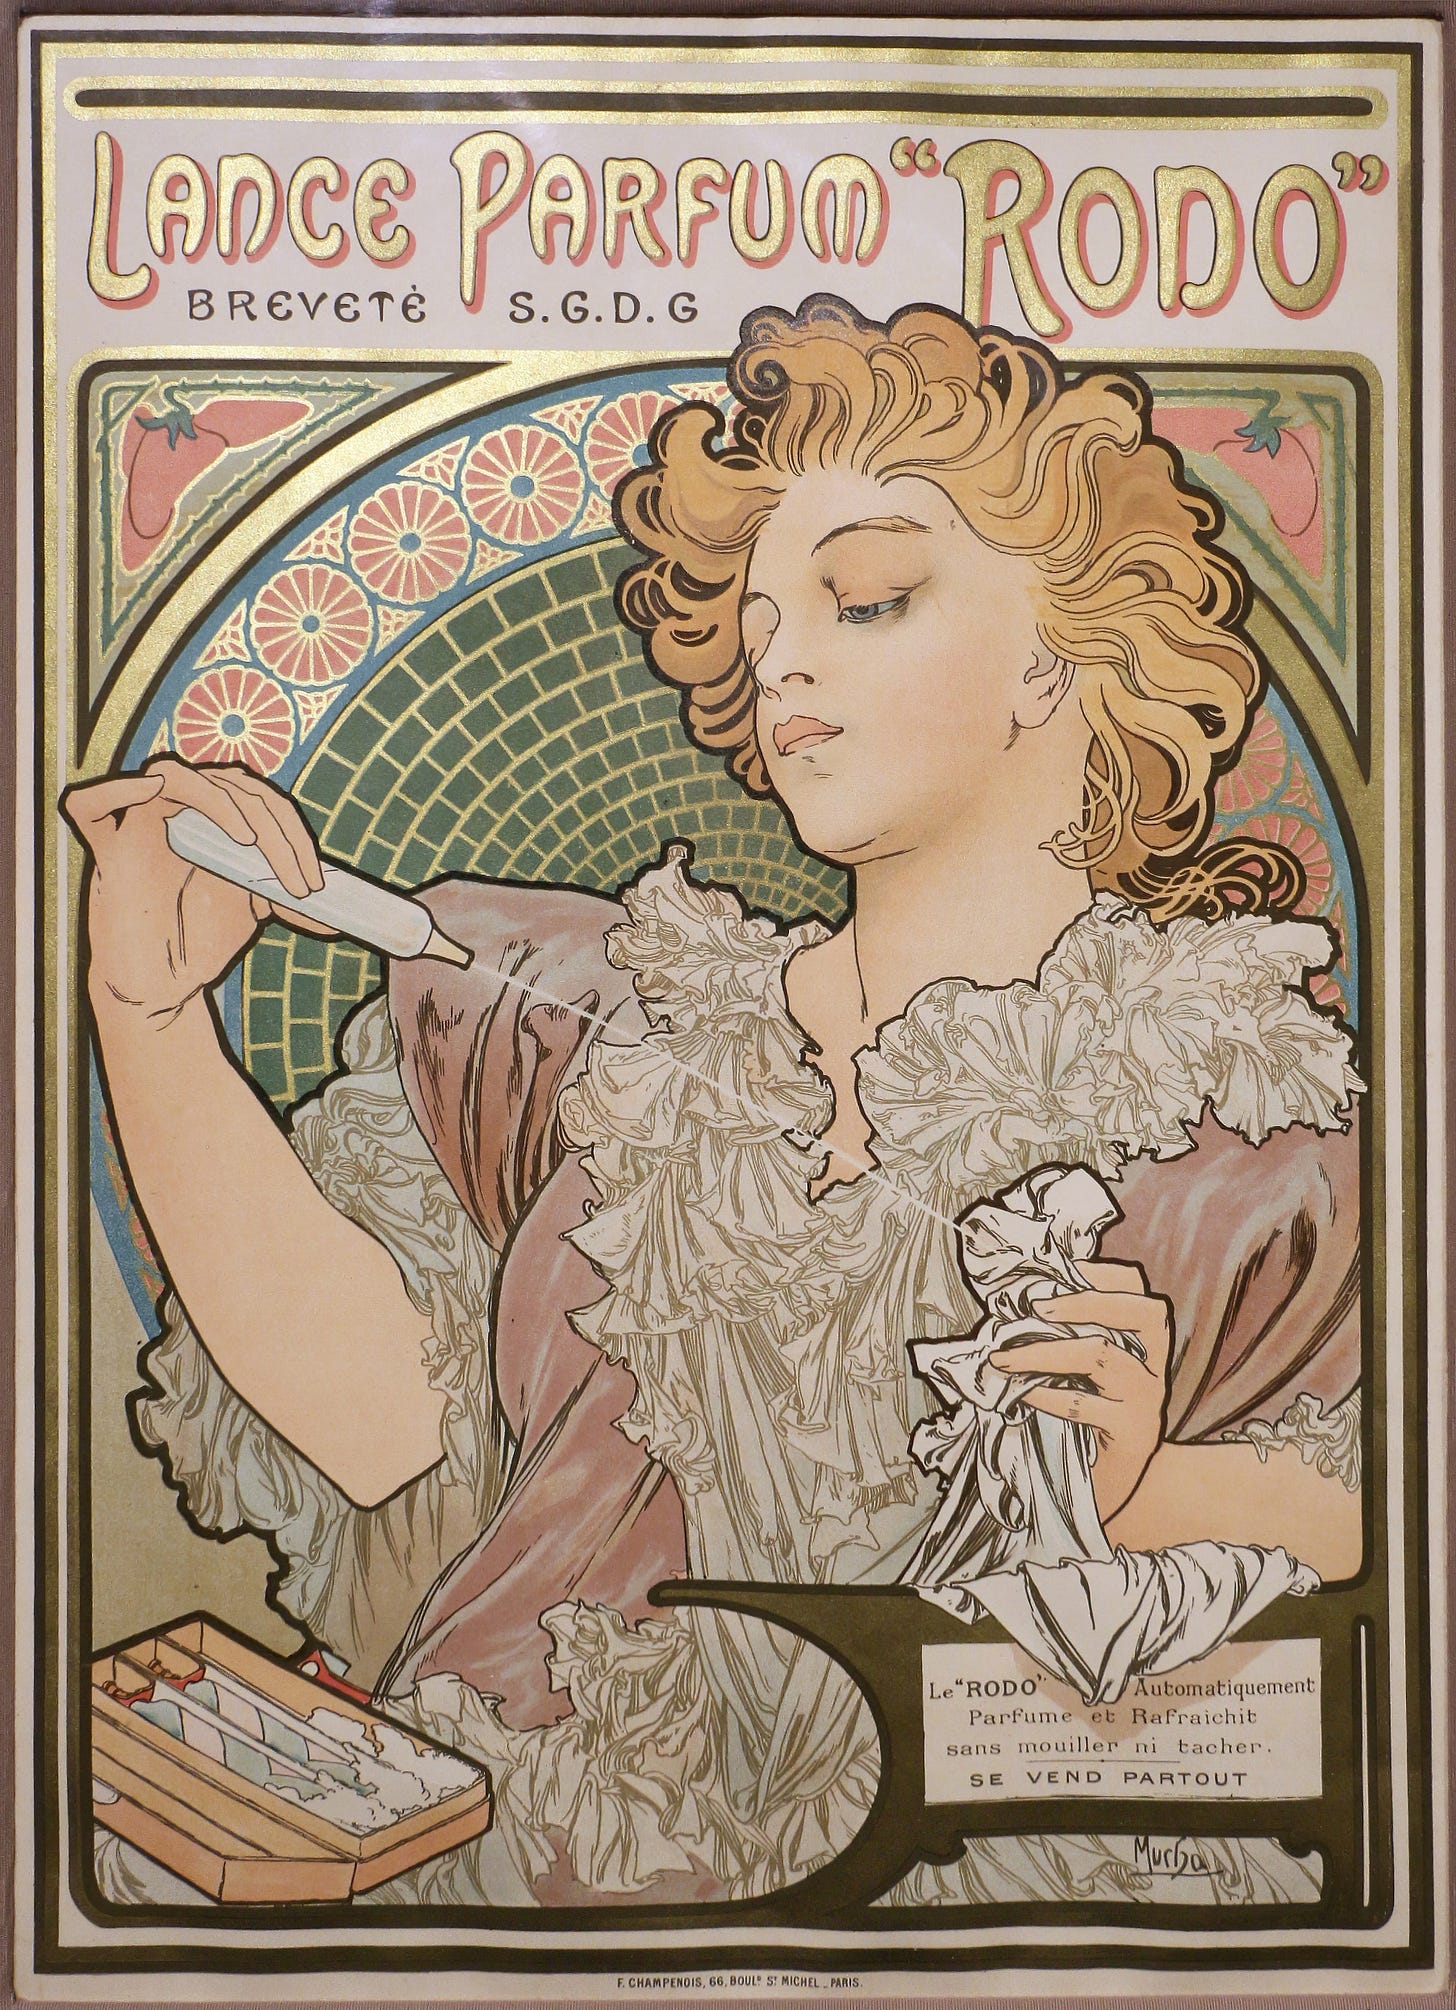 Lance Parfum Rodo (1896) by Alphonse Mucha